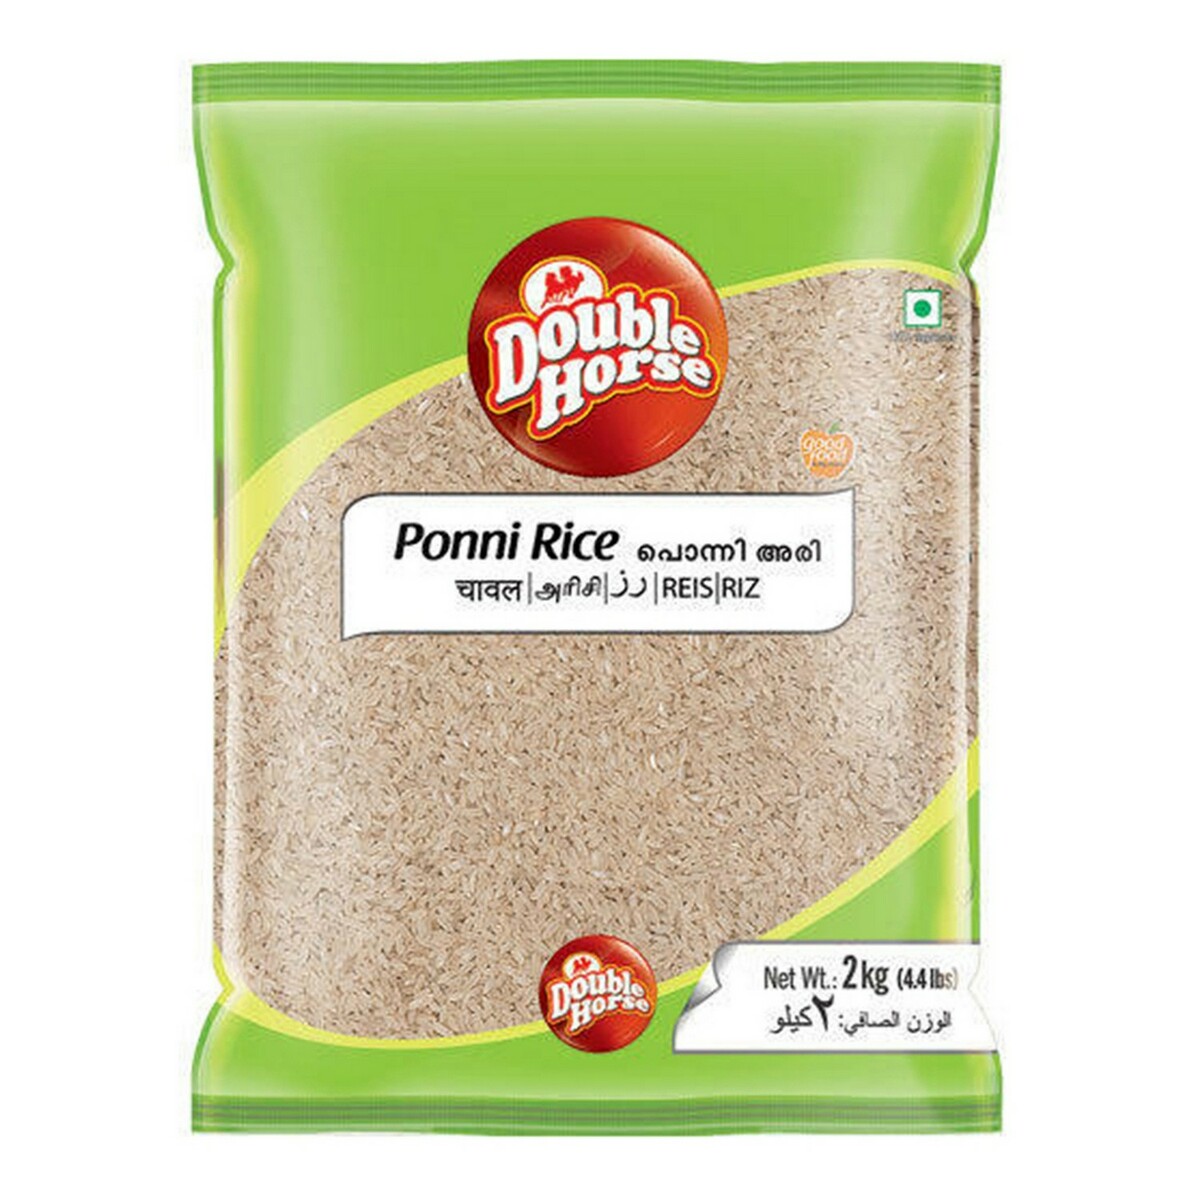 Double Horse Ponni Rice 2kg